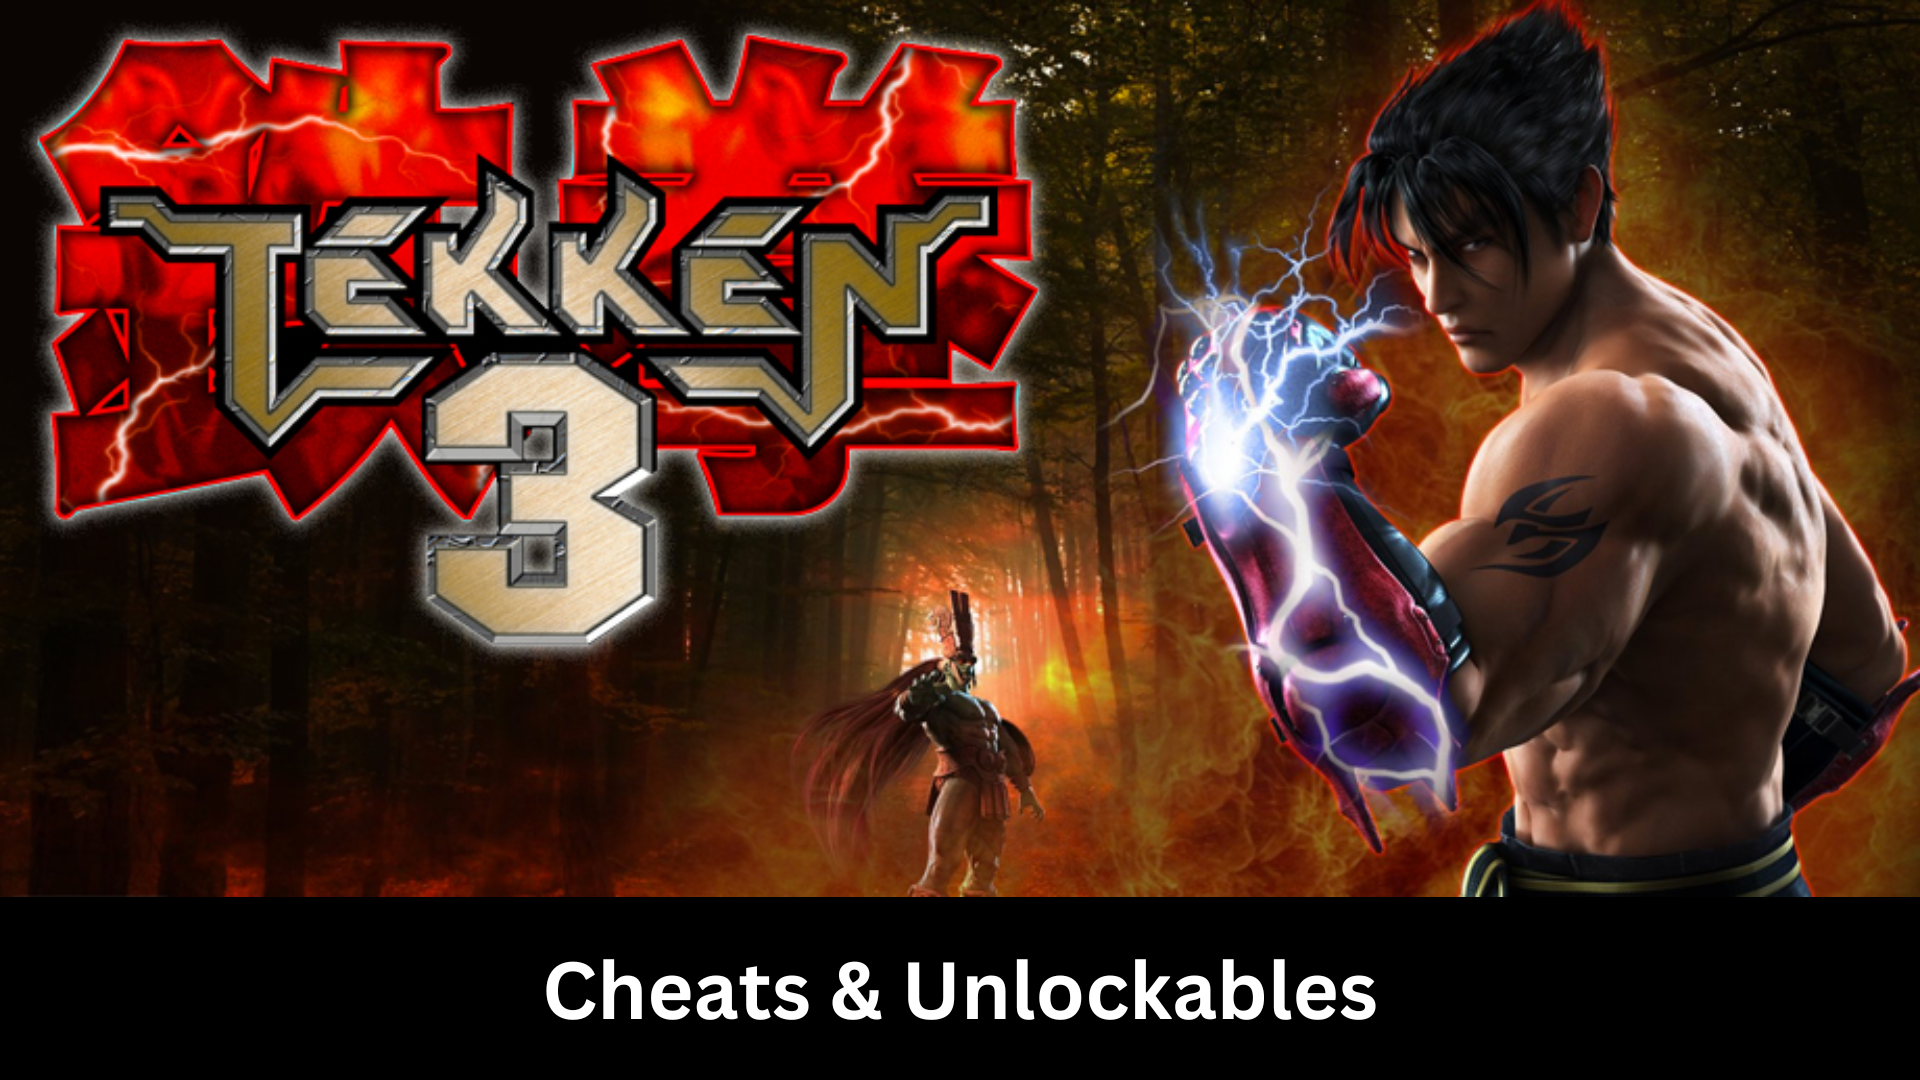 tekken 3 cheats and unlockables